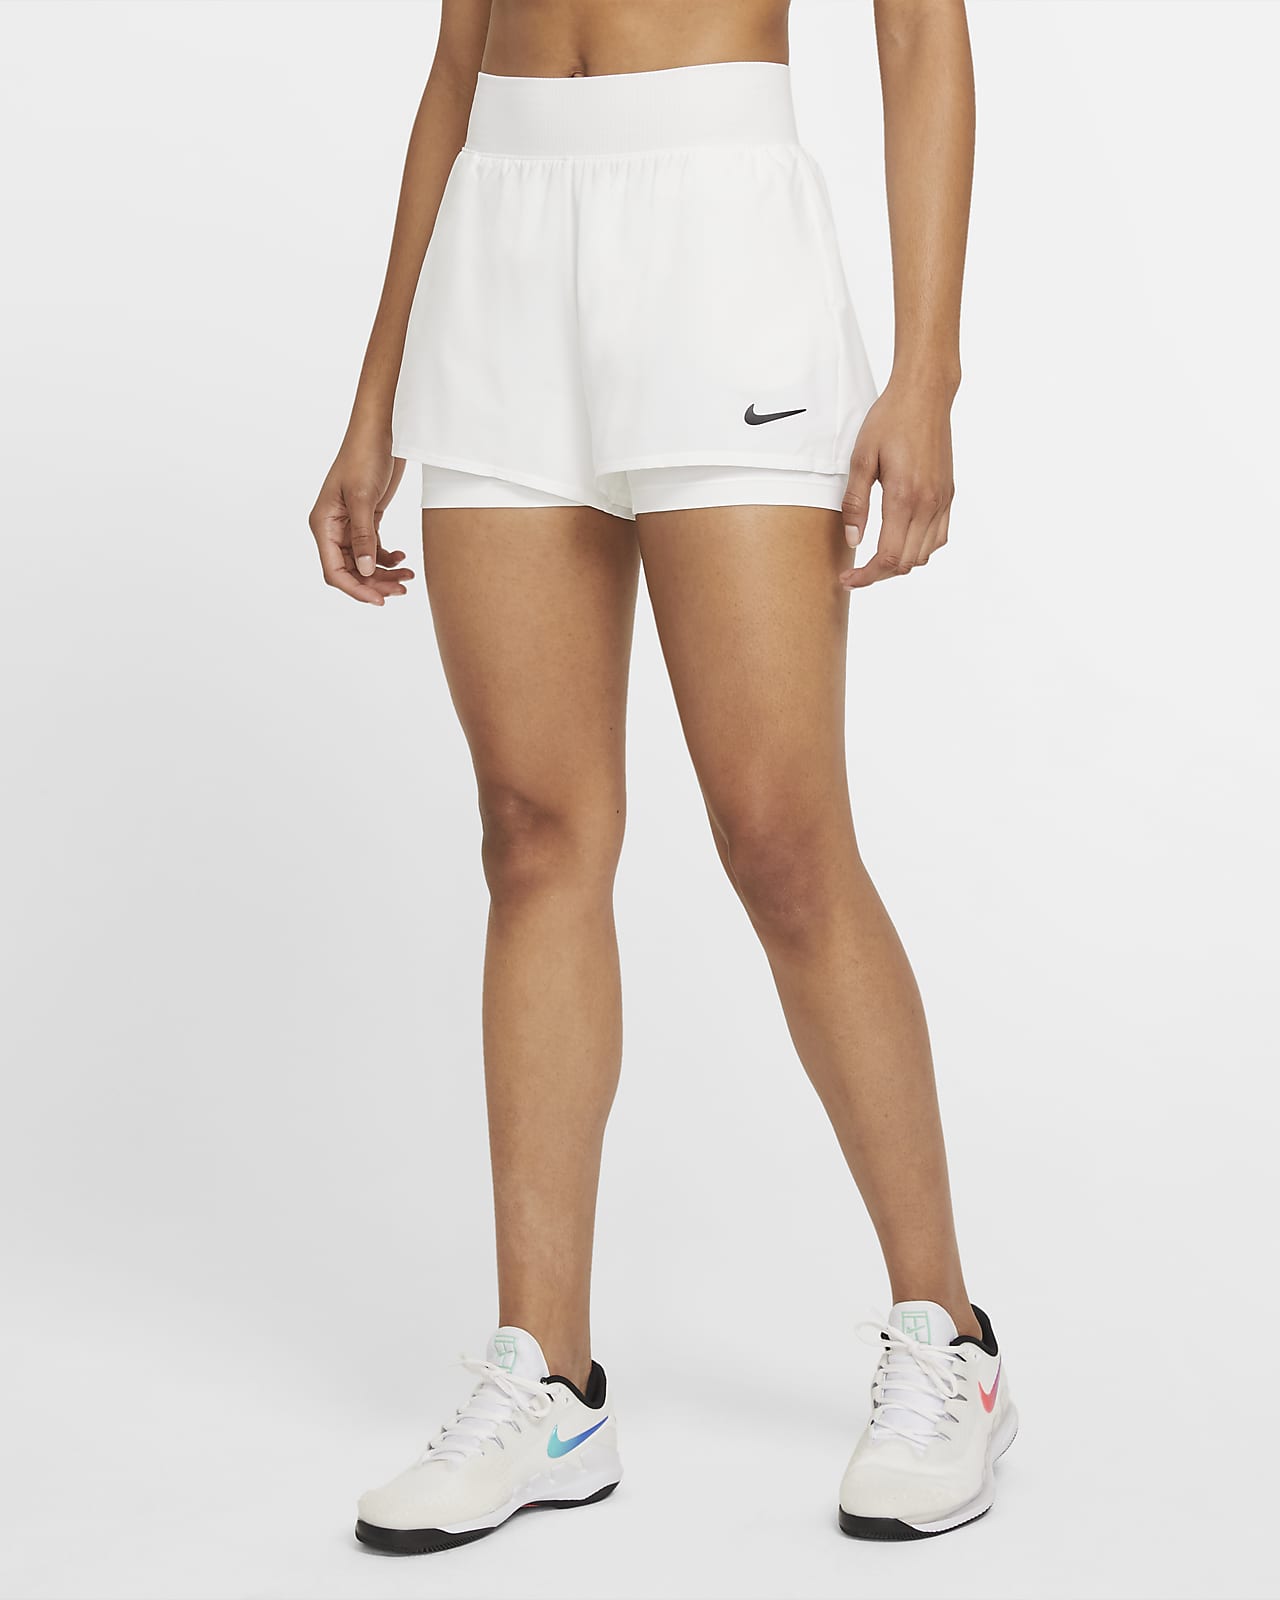 nike womens tennis clothes